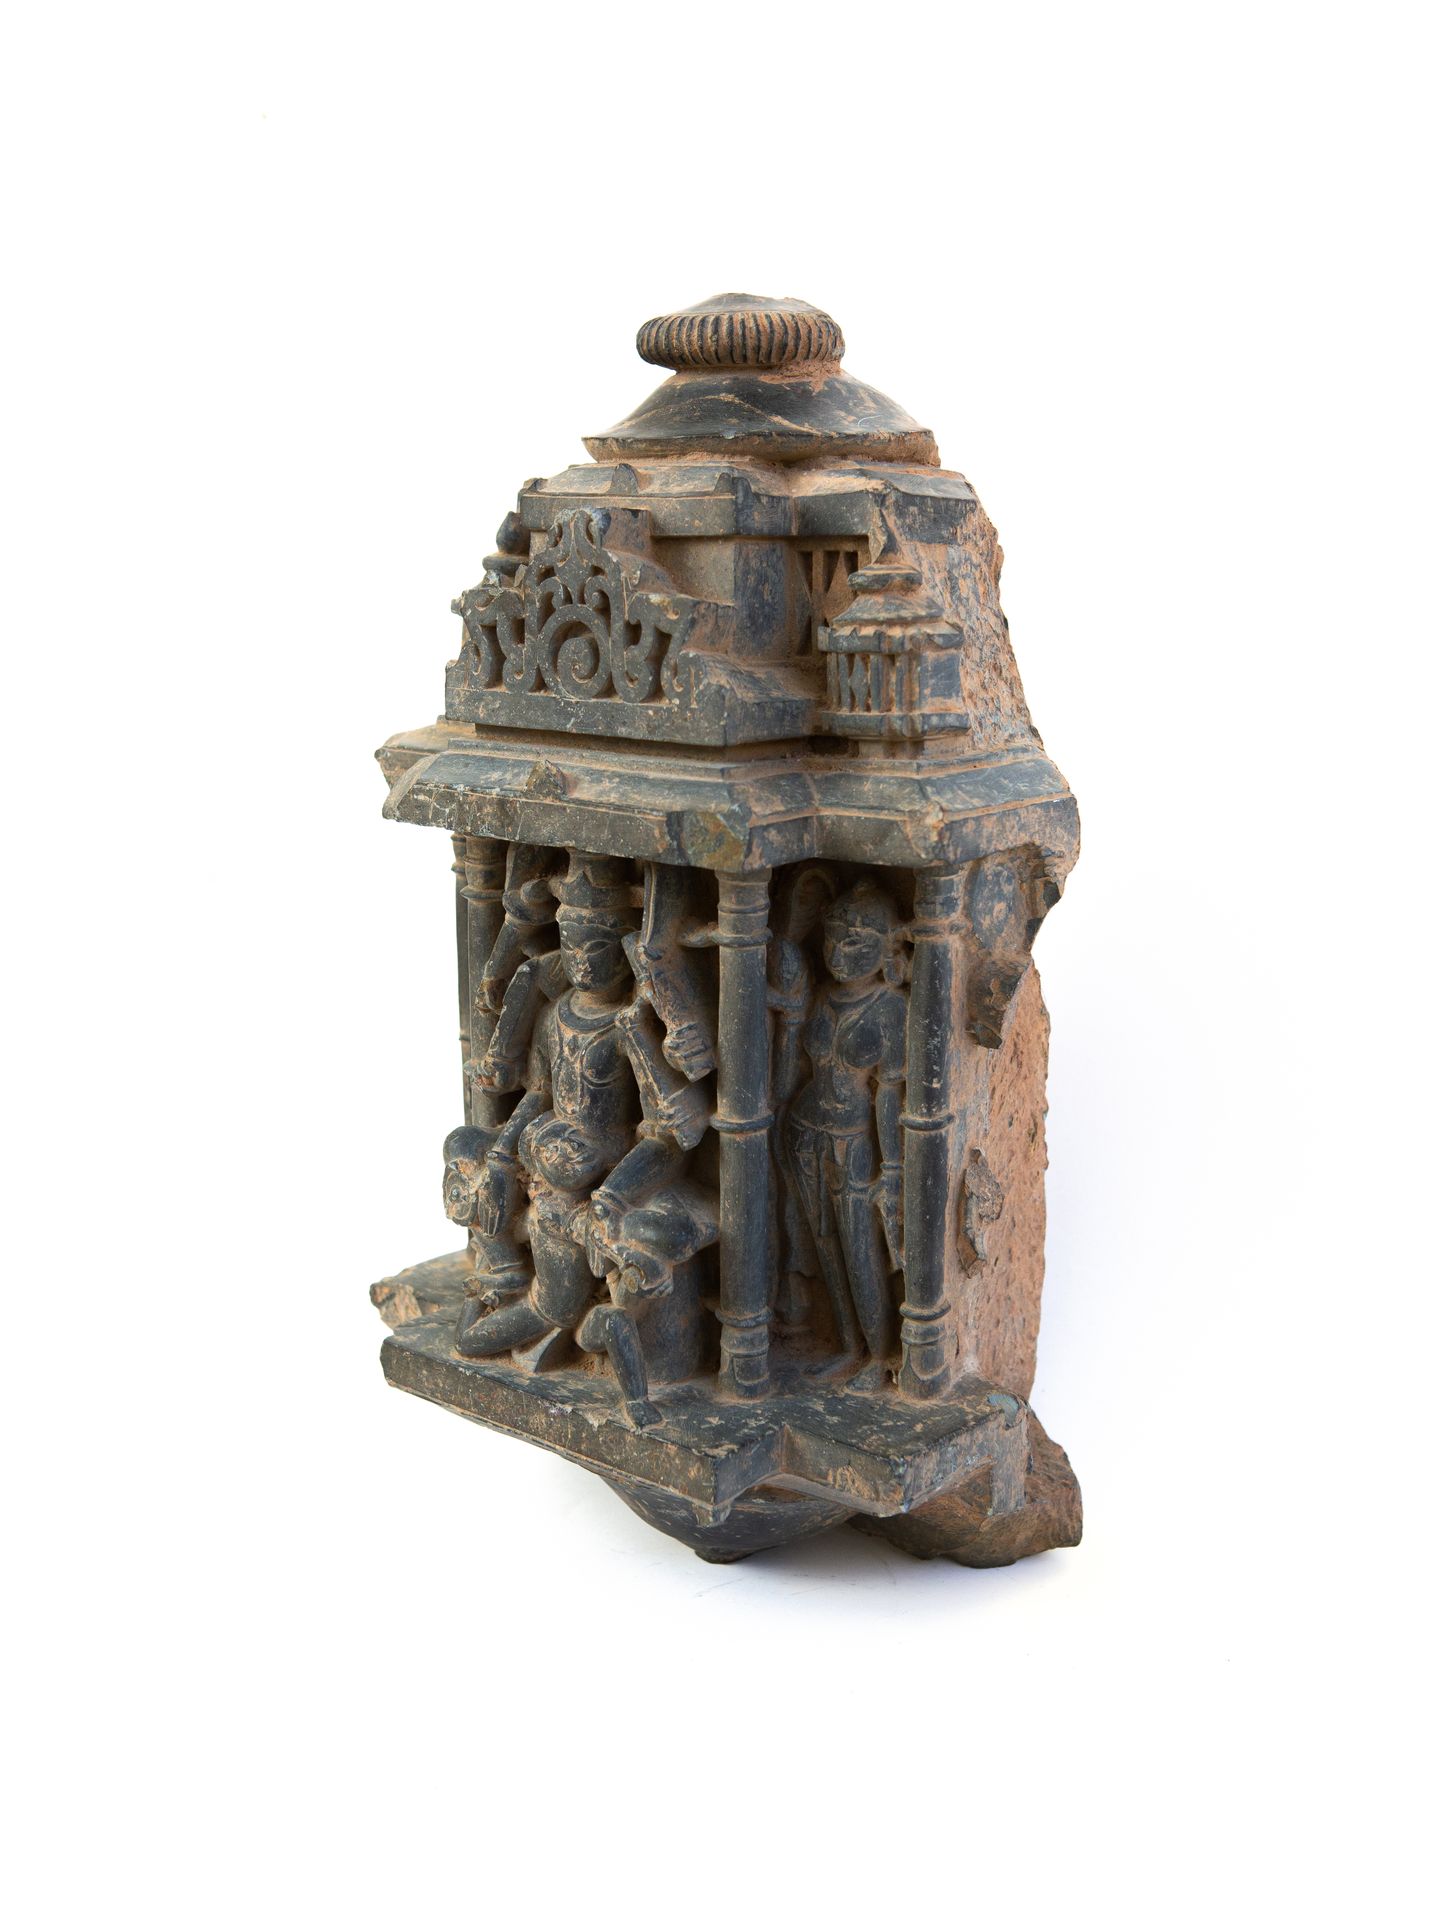 Null 印度，11-12世纪

黑砂岩雕刻的建筑元素，表现了创造的保护神毗湿奴-加鲁达萨那（Vishnu Garudasana）骑着一只风格化的鹰，两侧是仆人&hellip;